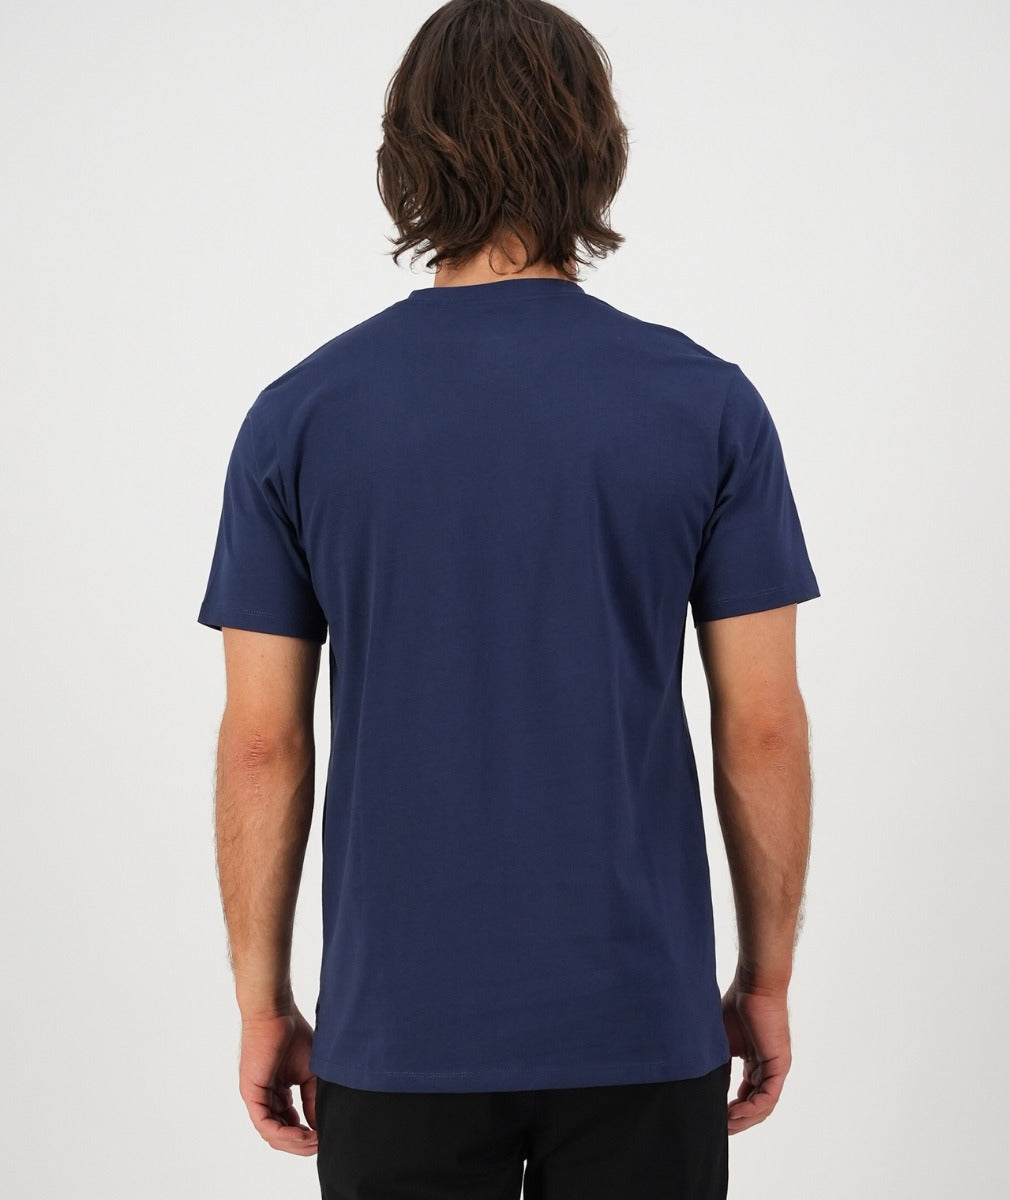 Swanndri Mens Traverse Print T shirt - Navy/Blue